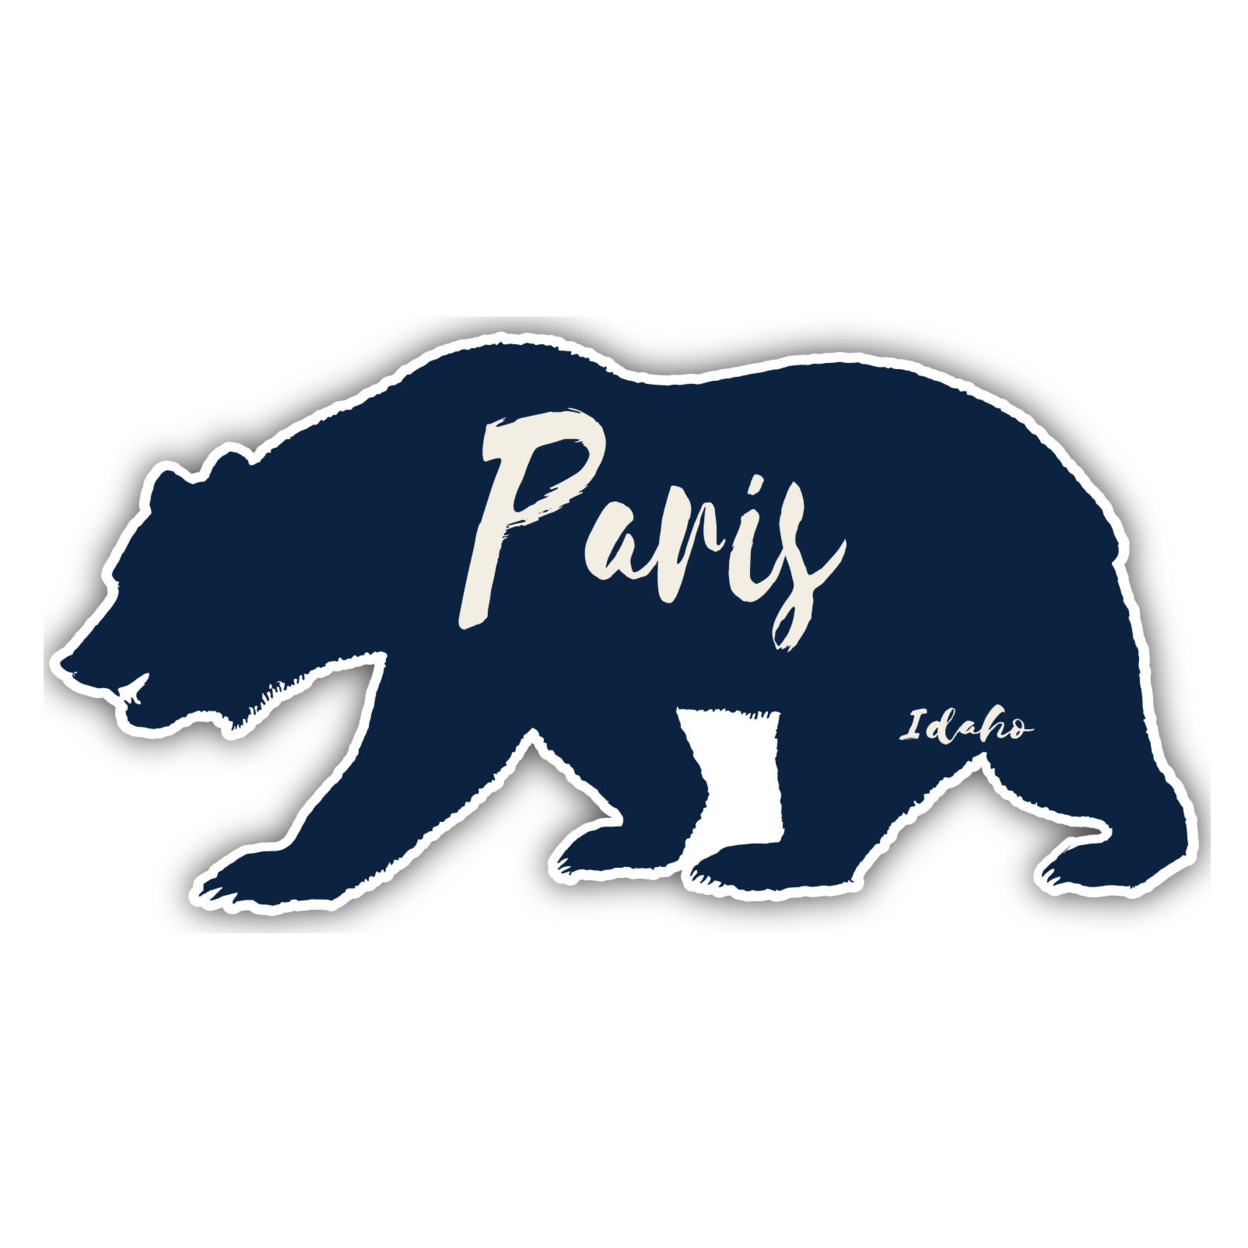 Paris Idaho Souvenir Decorative Stickers (Choose Theme And Size) - Single Unit, 2-Inch, Bear